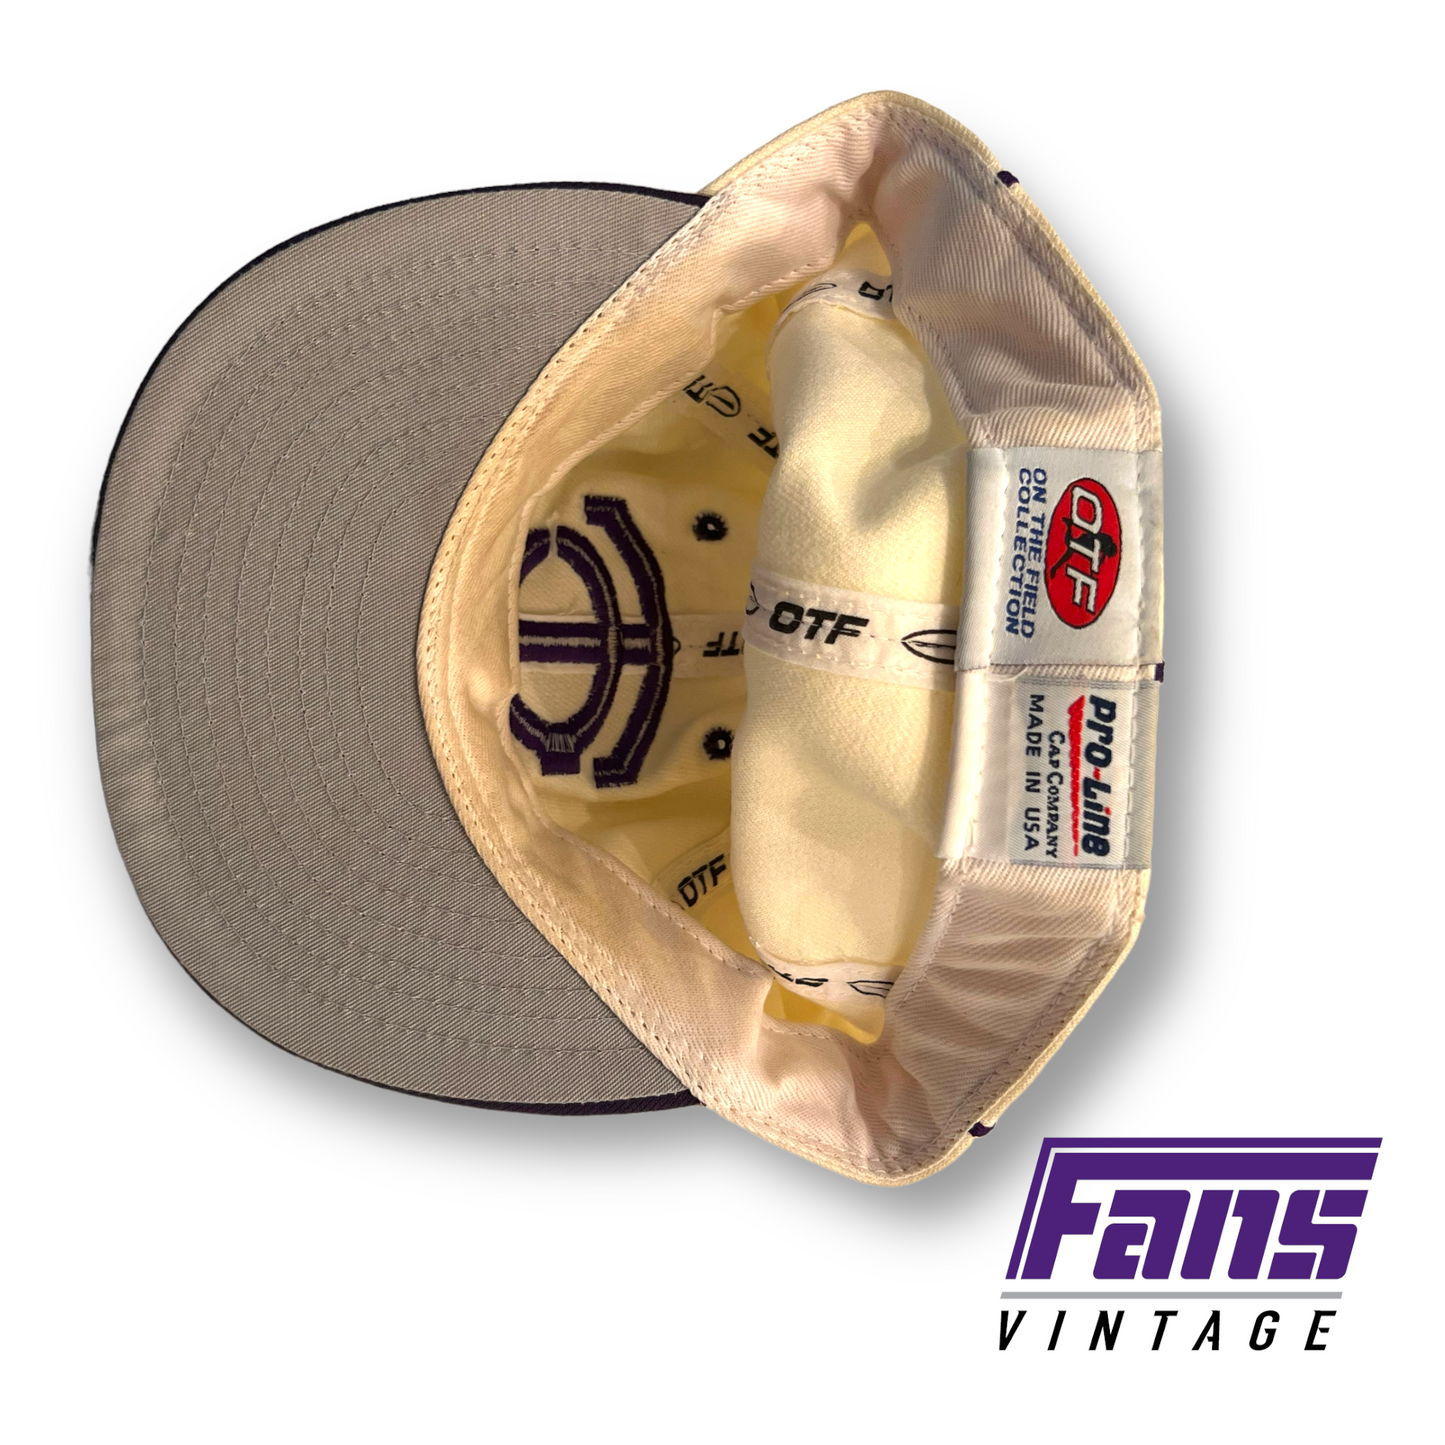 Vintage Team Issued TCU Baseball Proline Fitted Hat